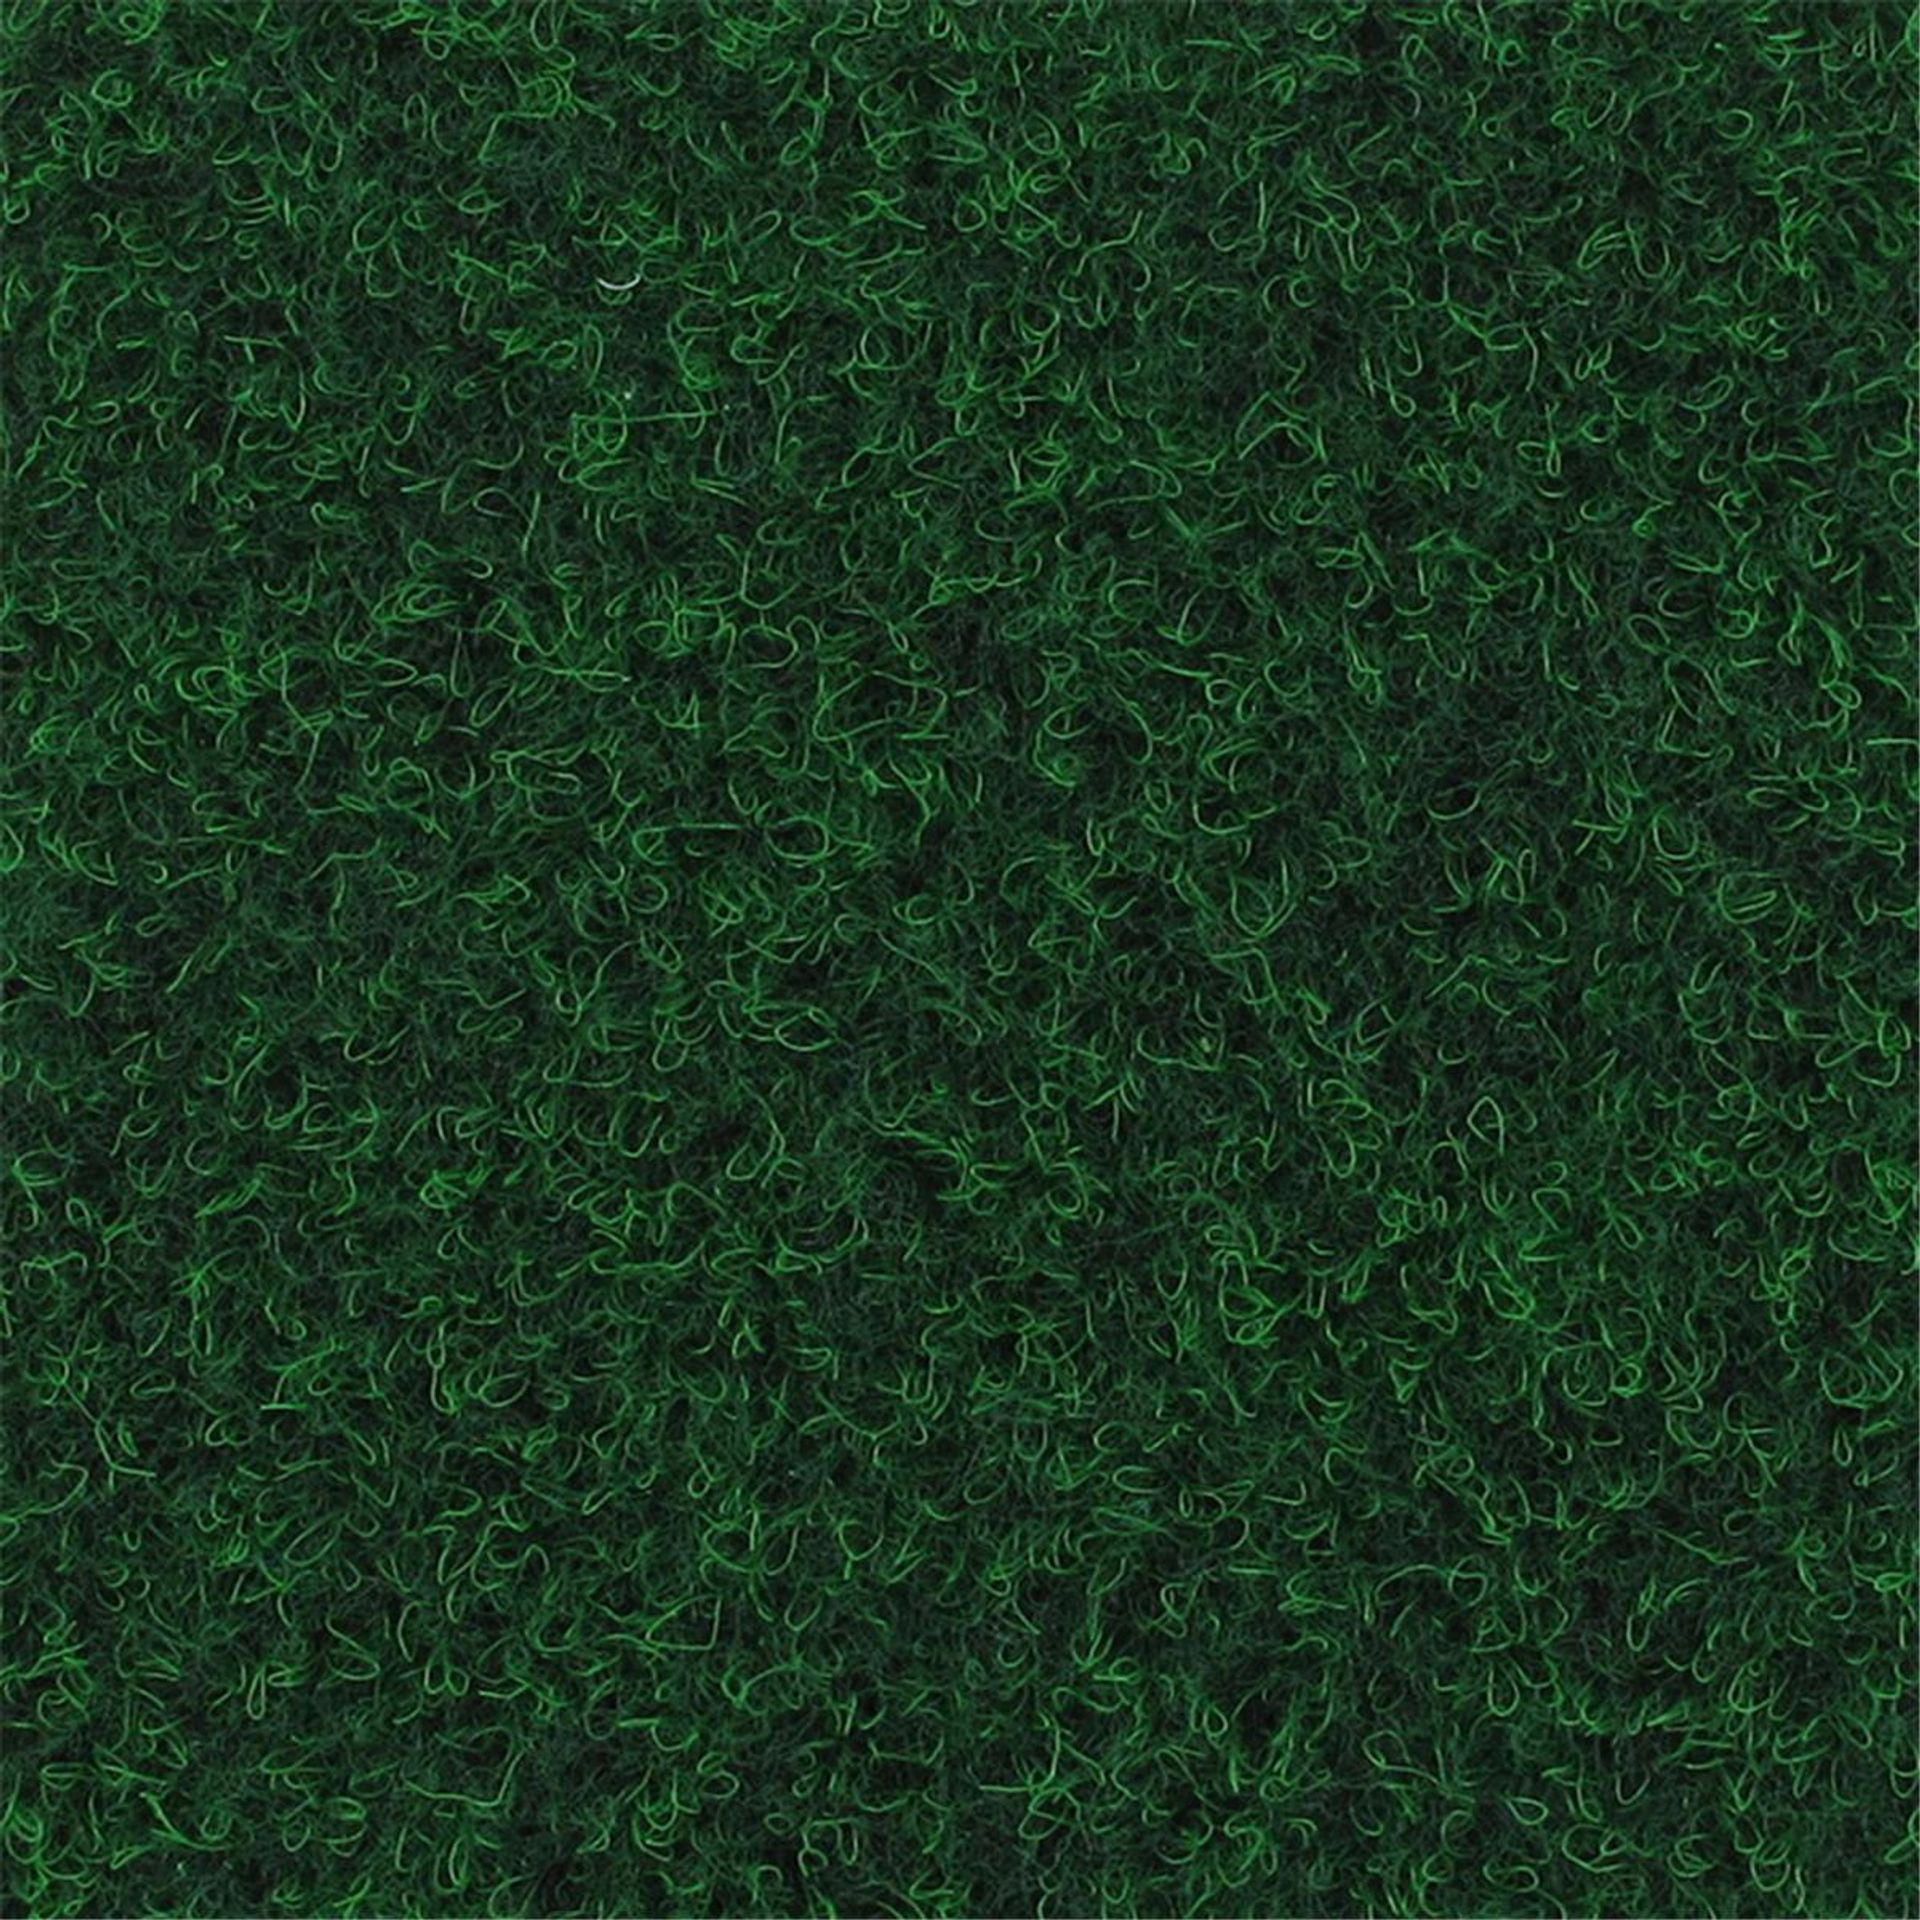 Messeboden Traffic-Fliese EXPOQUADRA Amazonia Green 1531 - Sommer Needlepunch - 100 cm x 100 cm